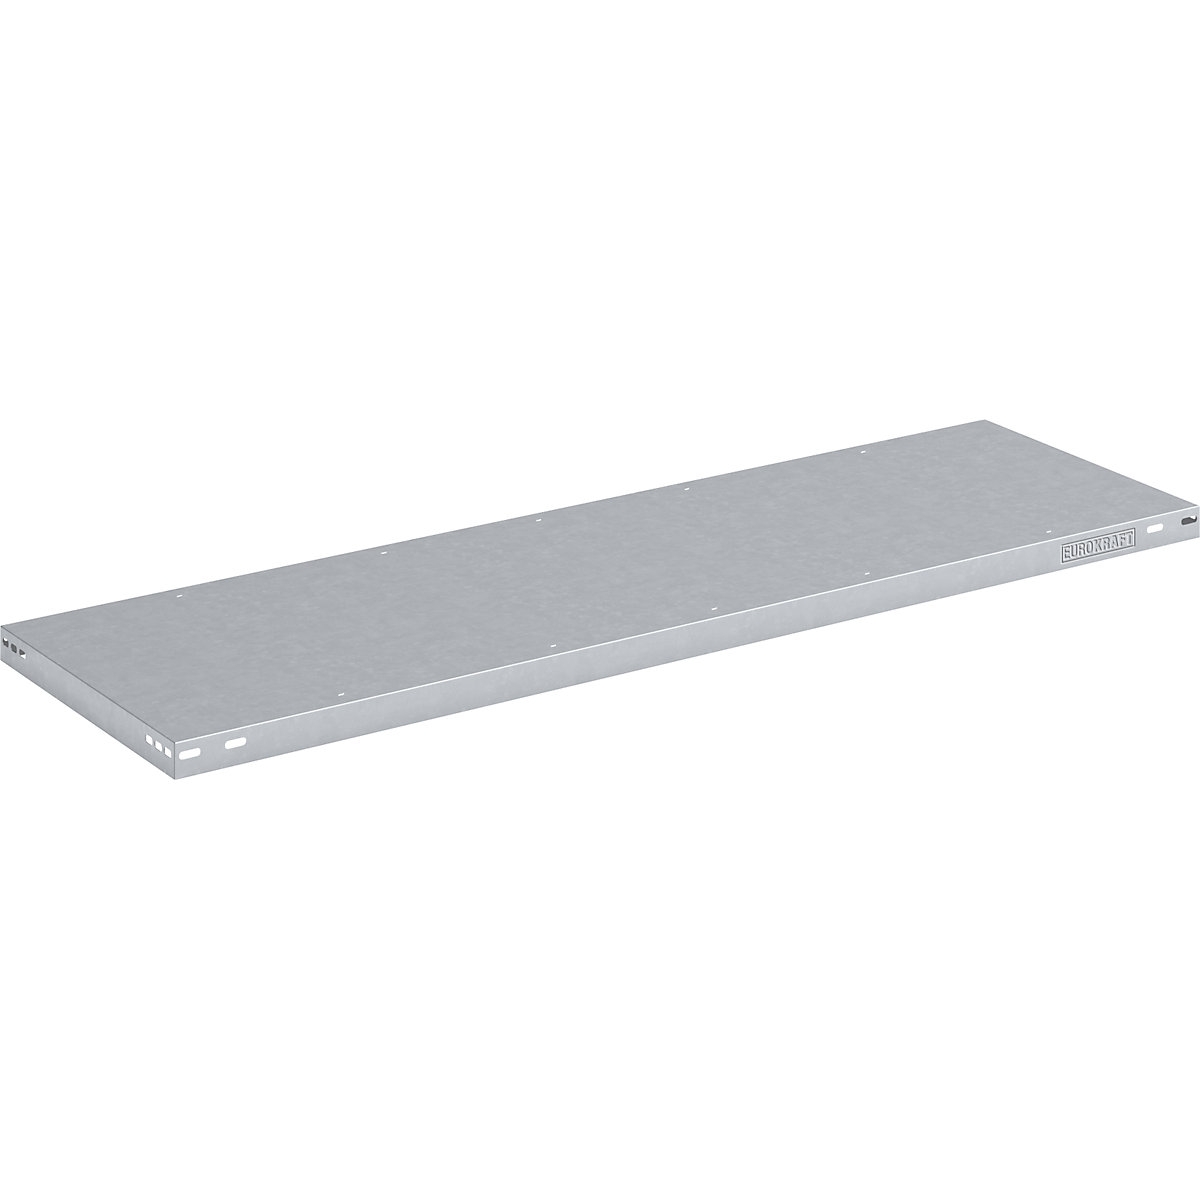 Zinc plated shelf – eurokraft pro, medium duty, WxD 1300 x 500 mm